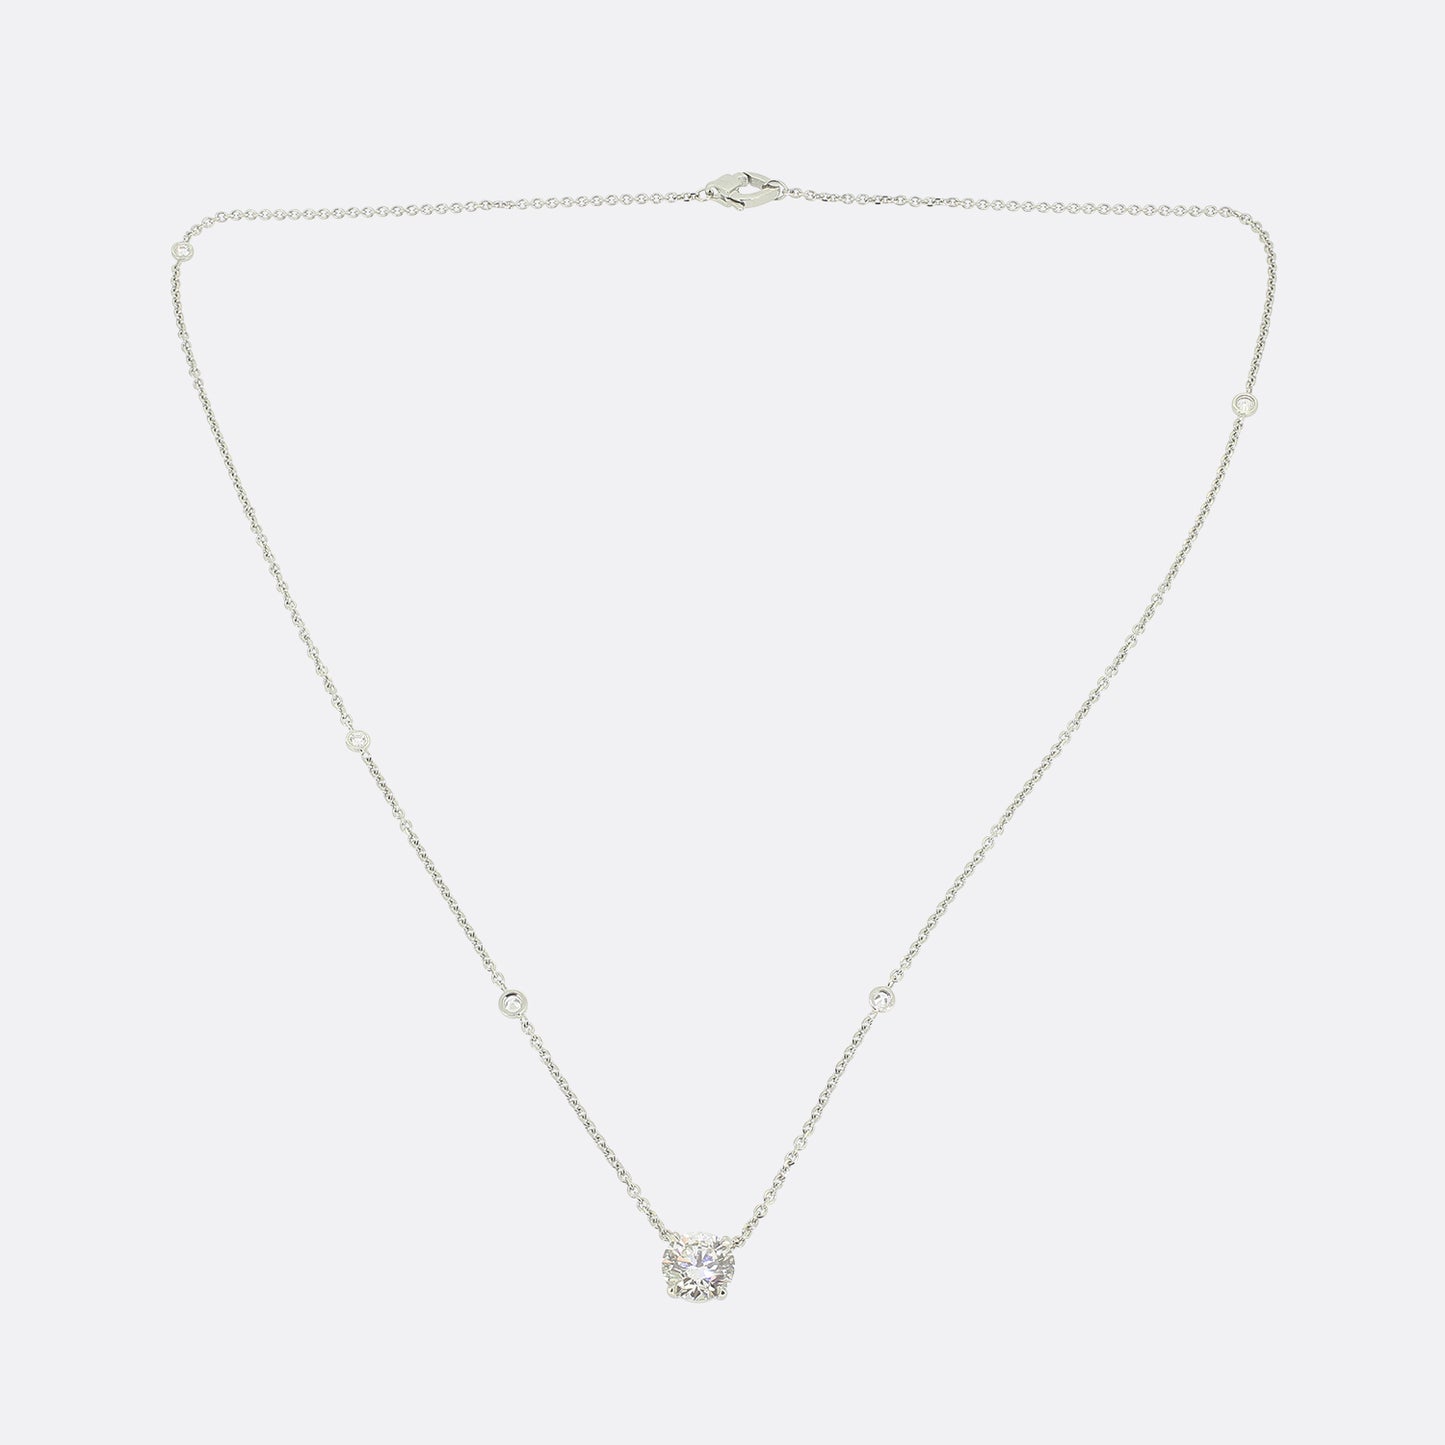 Boodles 1.70 Carat Diamond Necklace